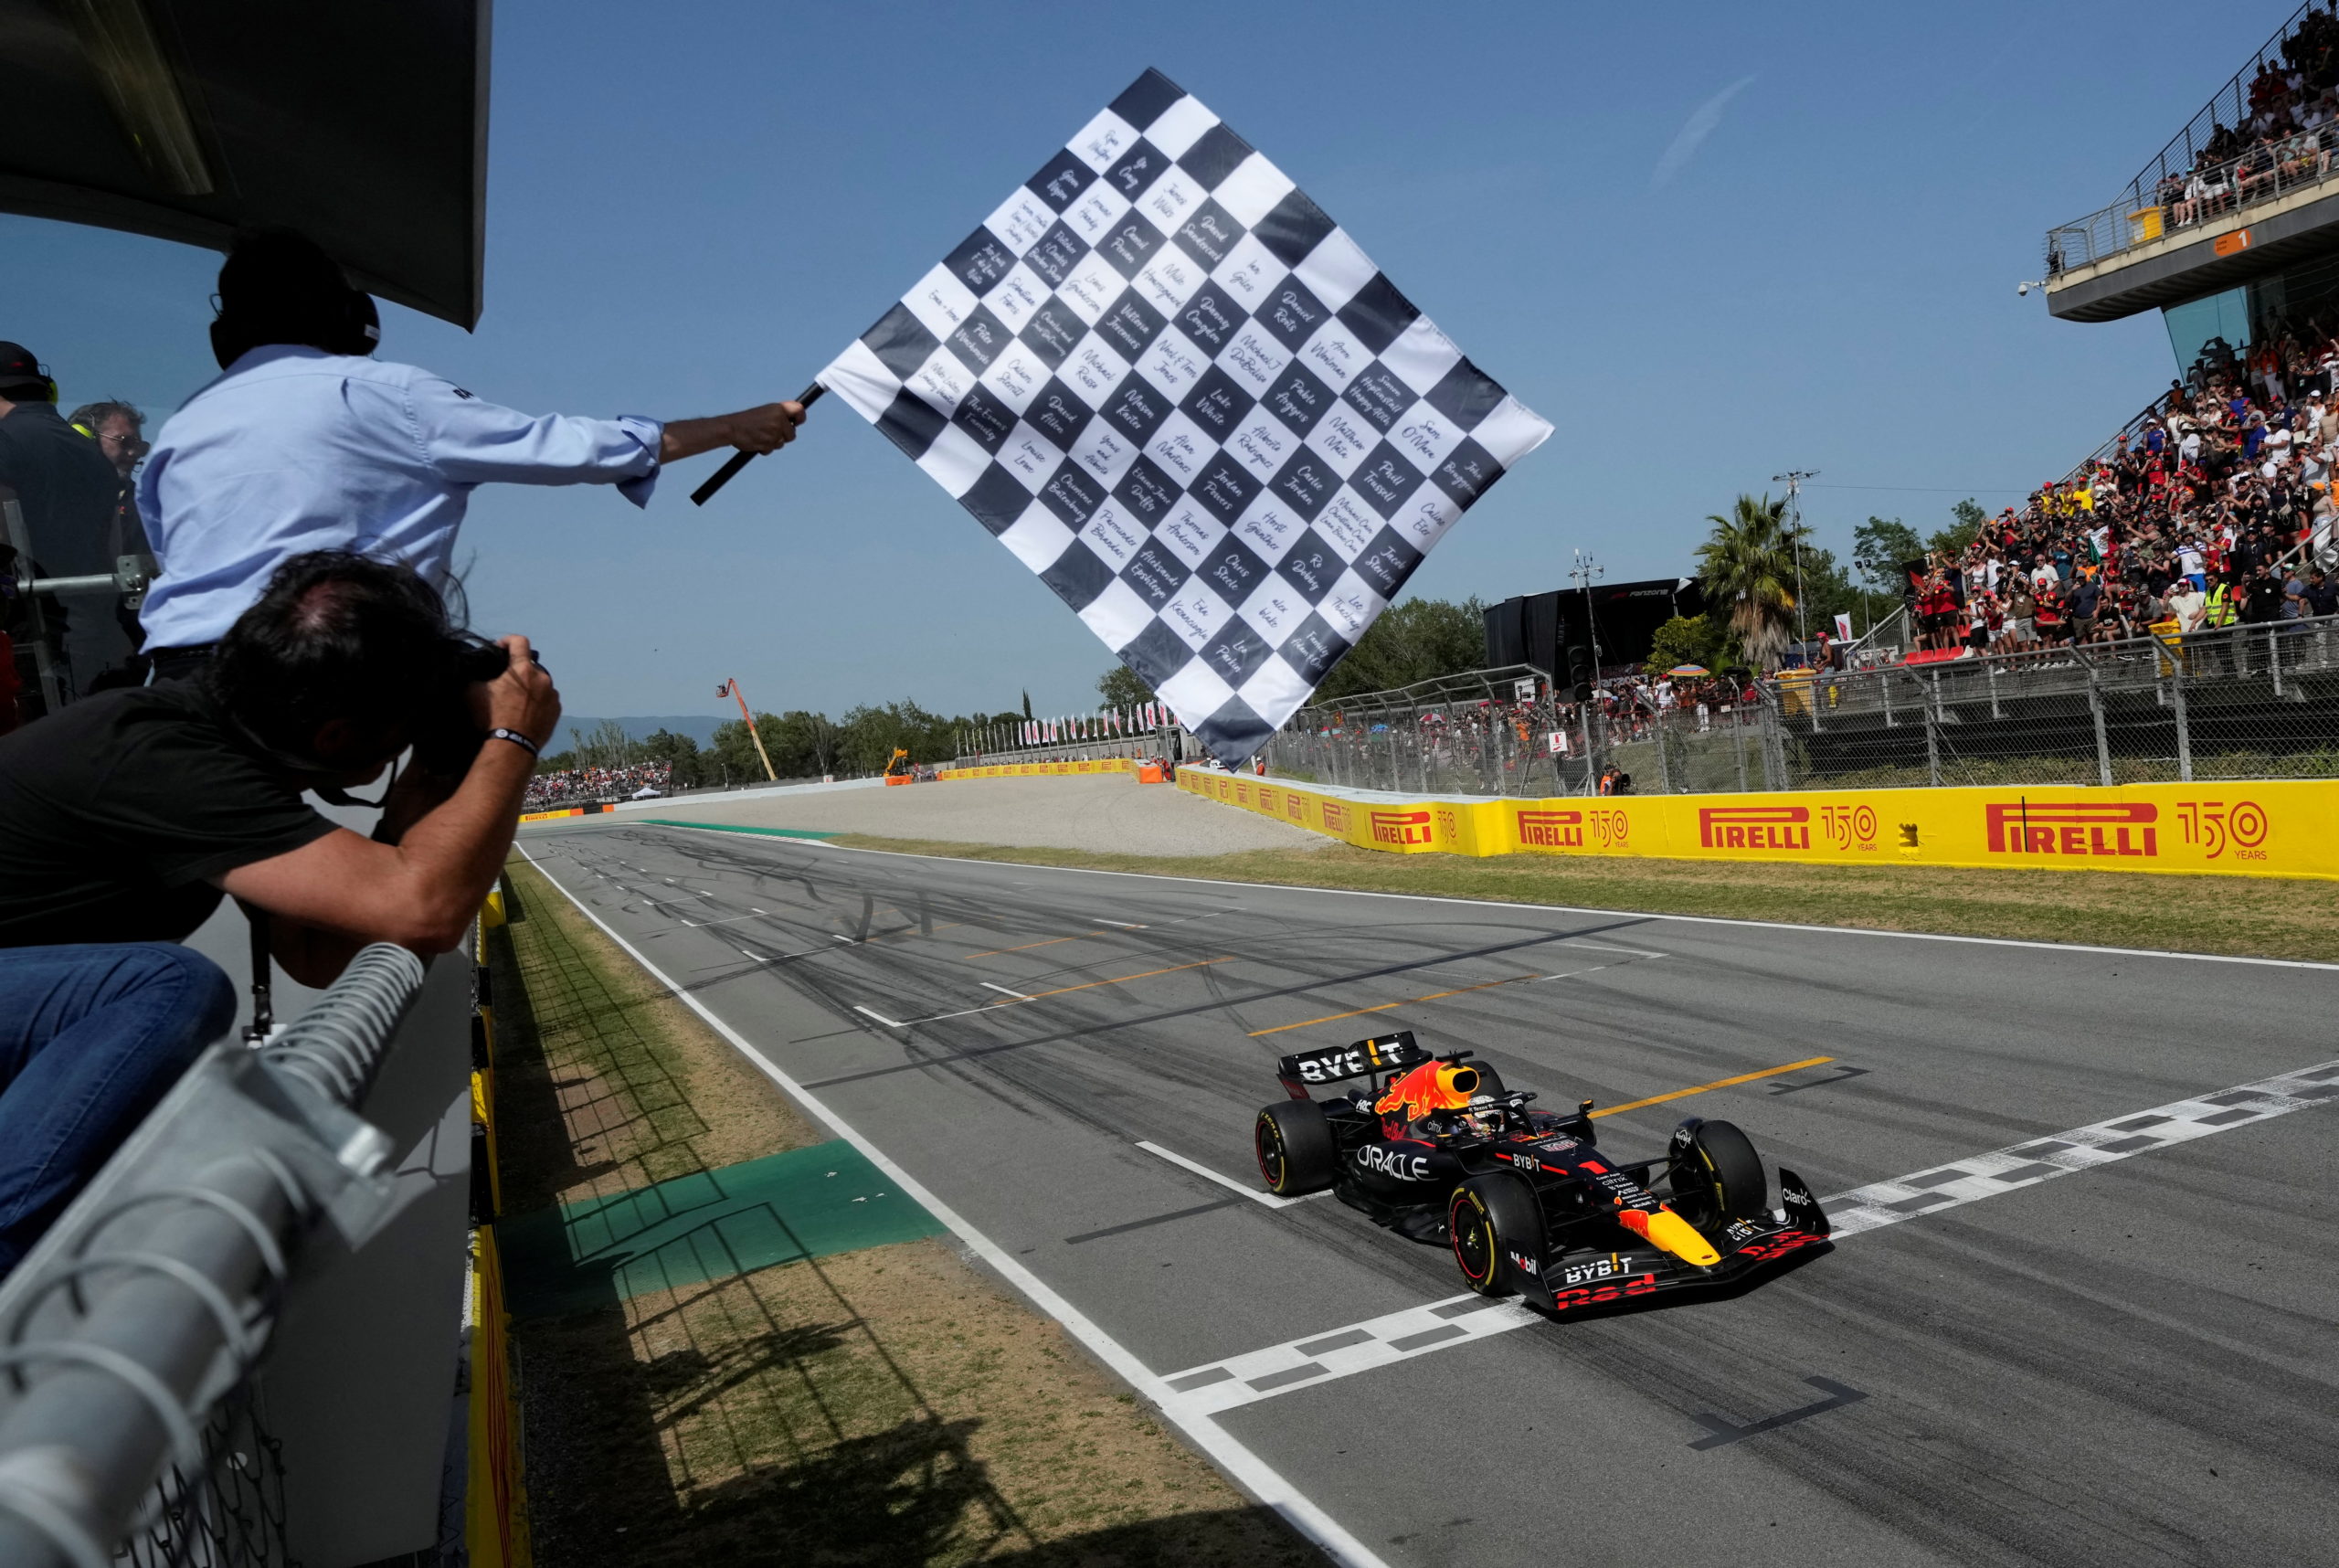  Spanish Grand Prix - Circuit de Barcelona-Catalunya, Barcelona, Spain - May 22, 2022 Red Bull's Max Verstappen crosses the line to win the race